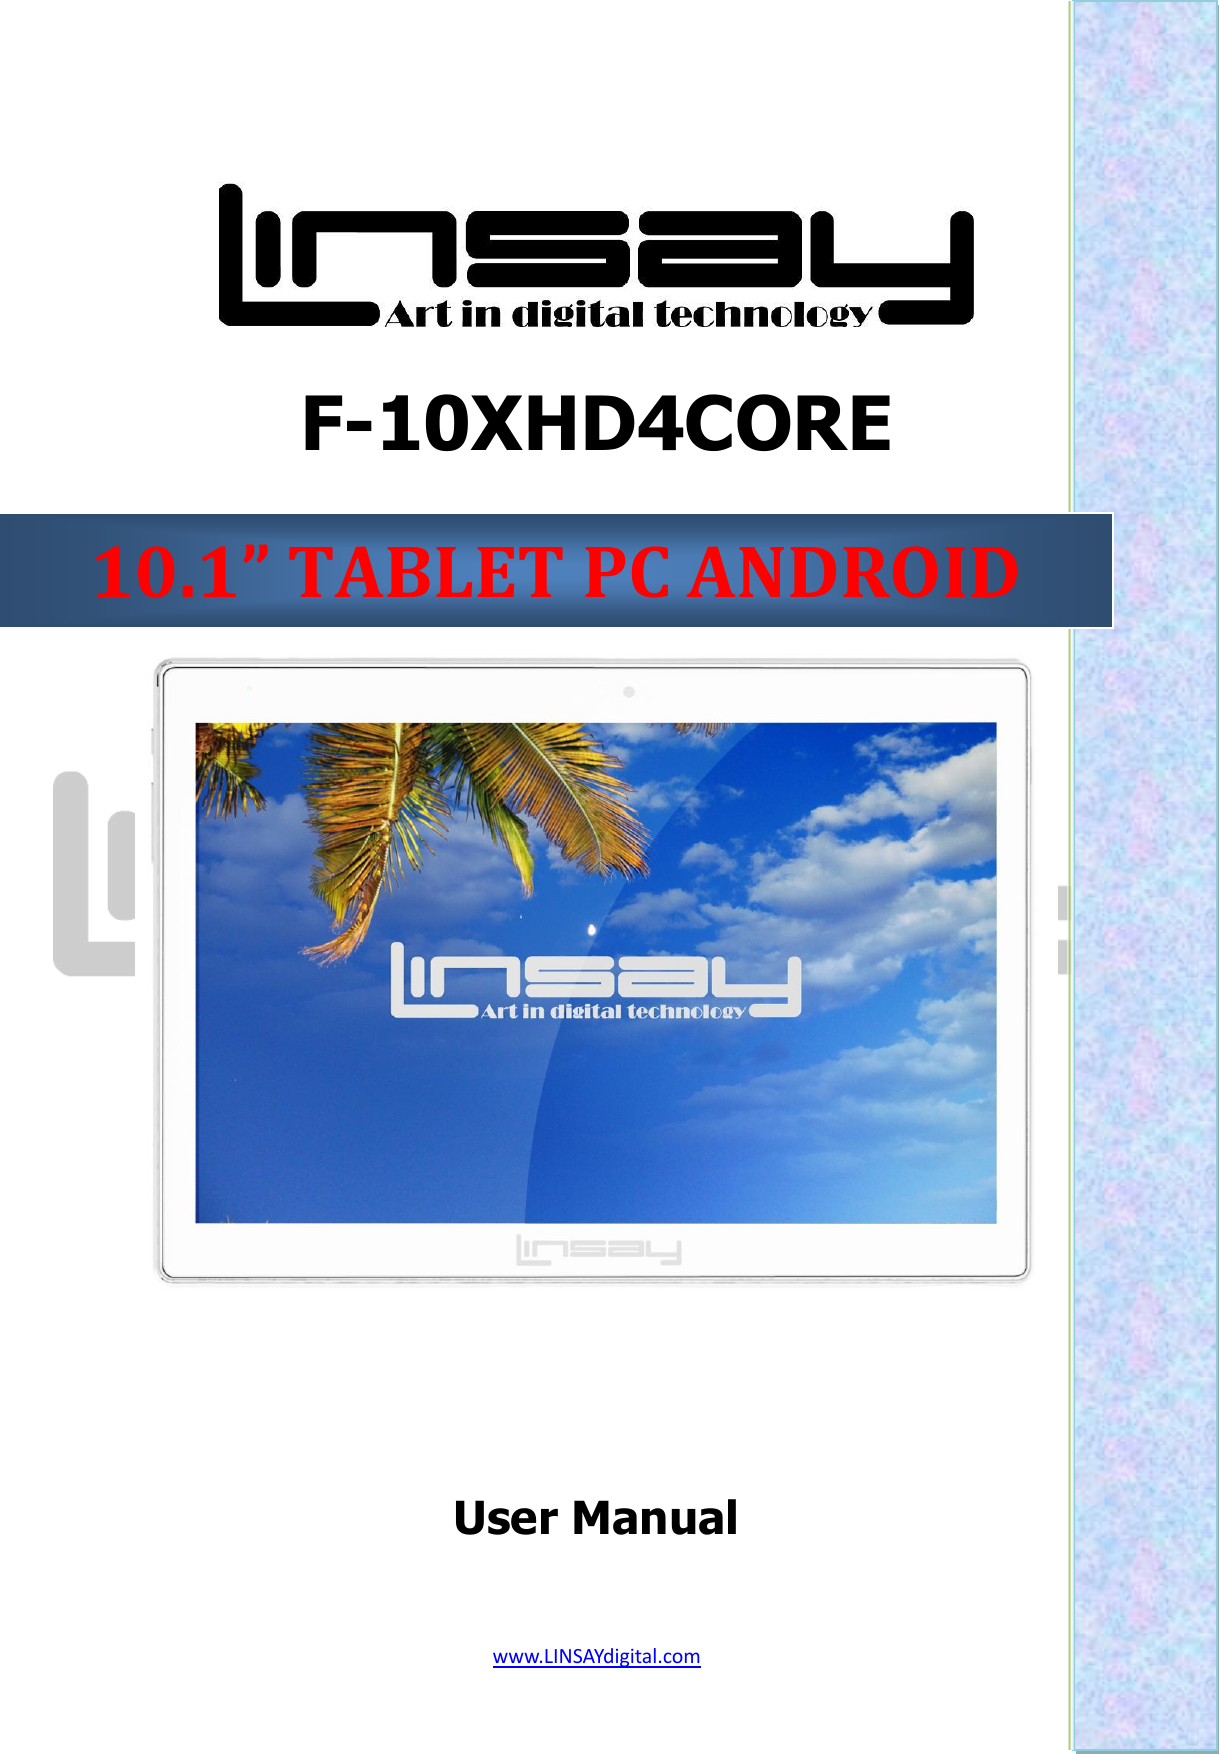  www.LINSAYdigital.com     F-10XHD4CORE     User Manual  10.1” TABLET PC ANDROID 